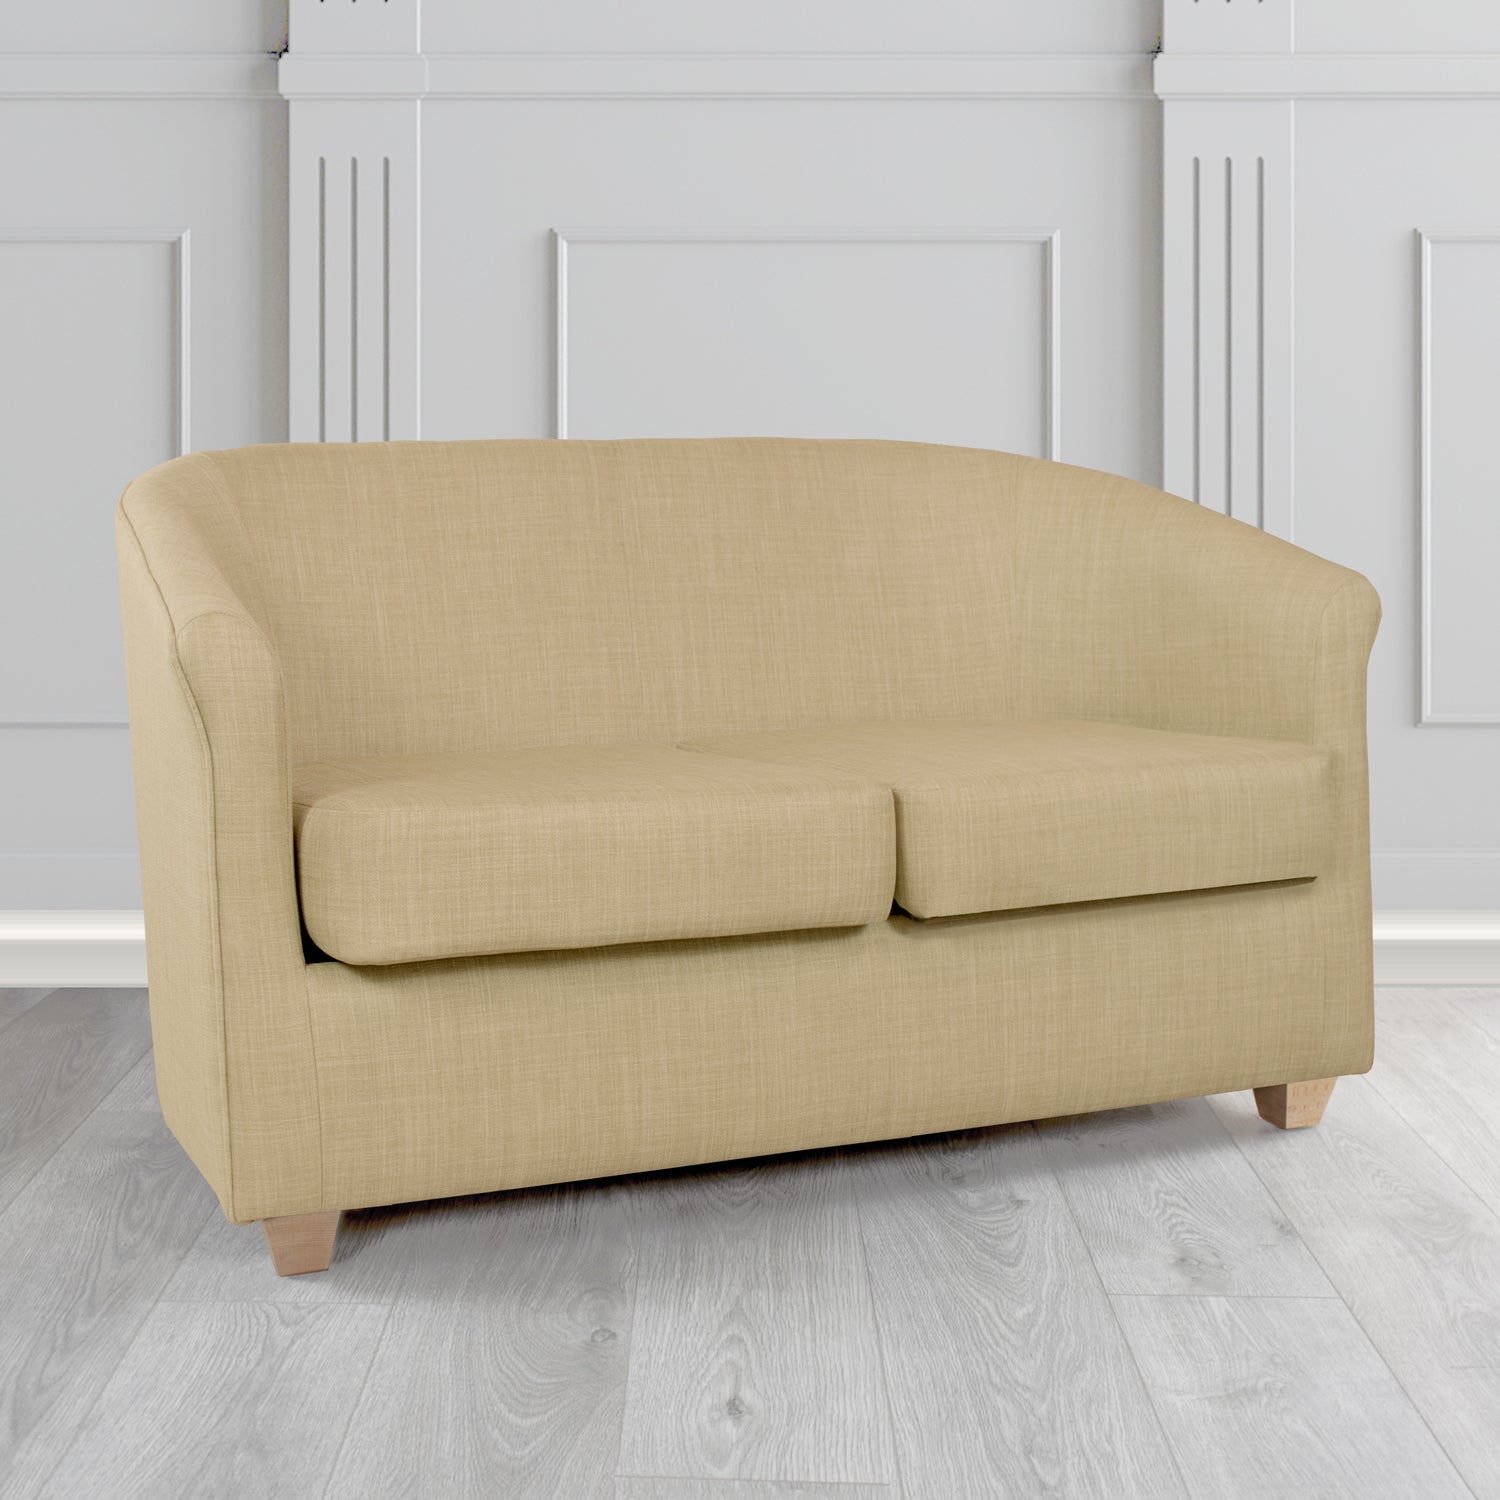 Cannes Charles Mink Linen Fabric 2 Seater Tub Sofa - The Tub Chair Shop